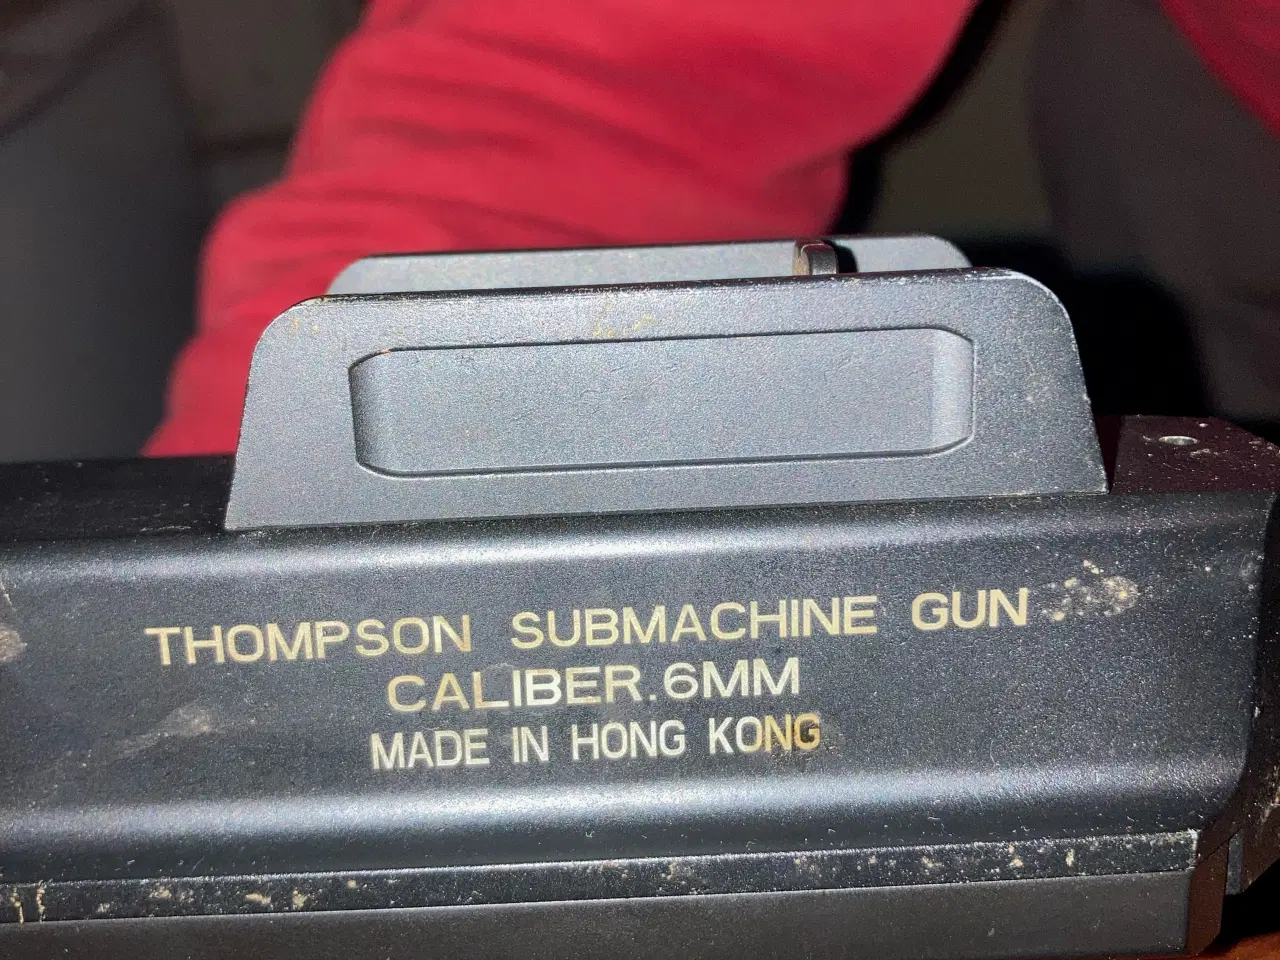 Billede 1 - Cypergun - Thomson incl 3000 kugler